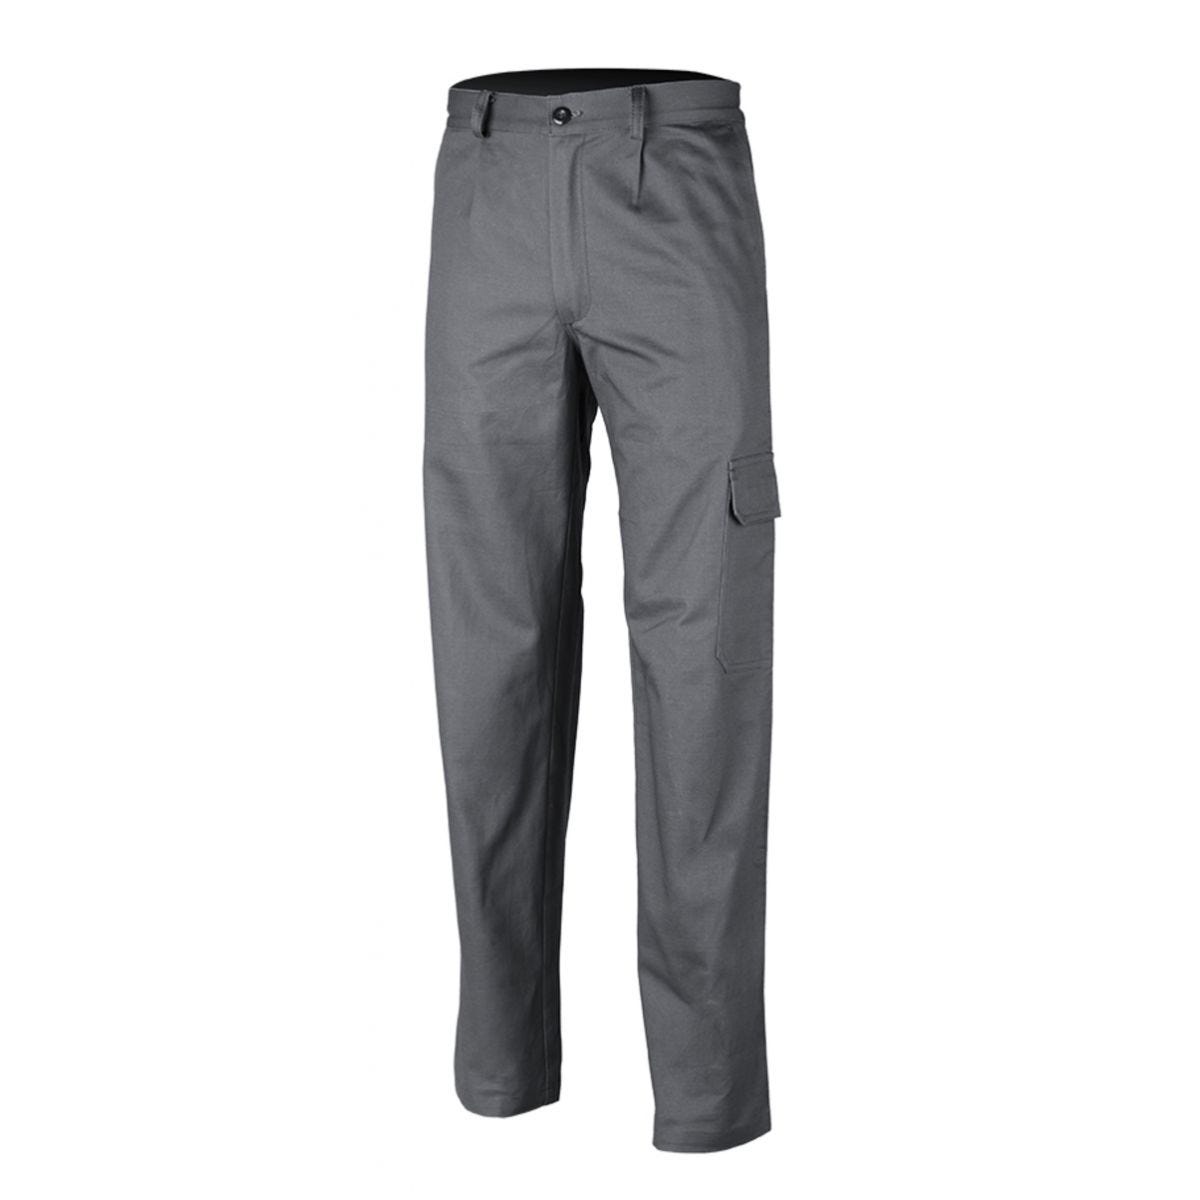 Pantalon INDUSTRY gris - COVERGUARD - Taille M 0